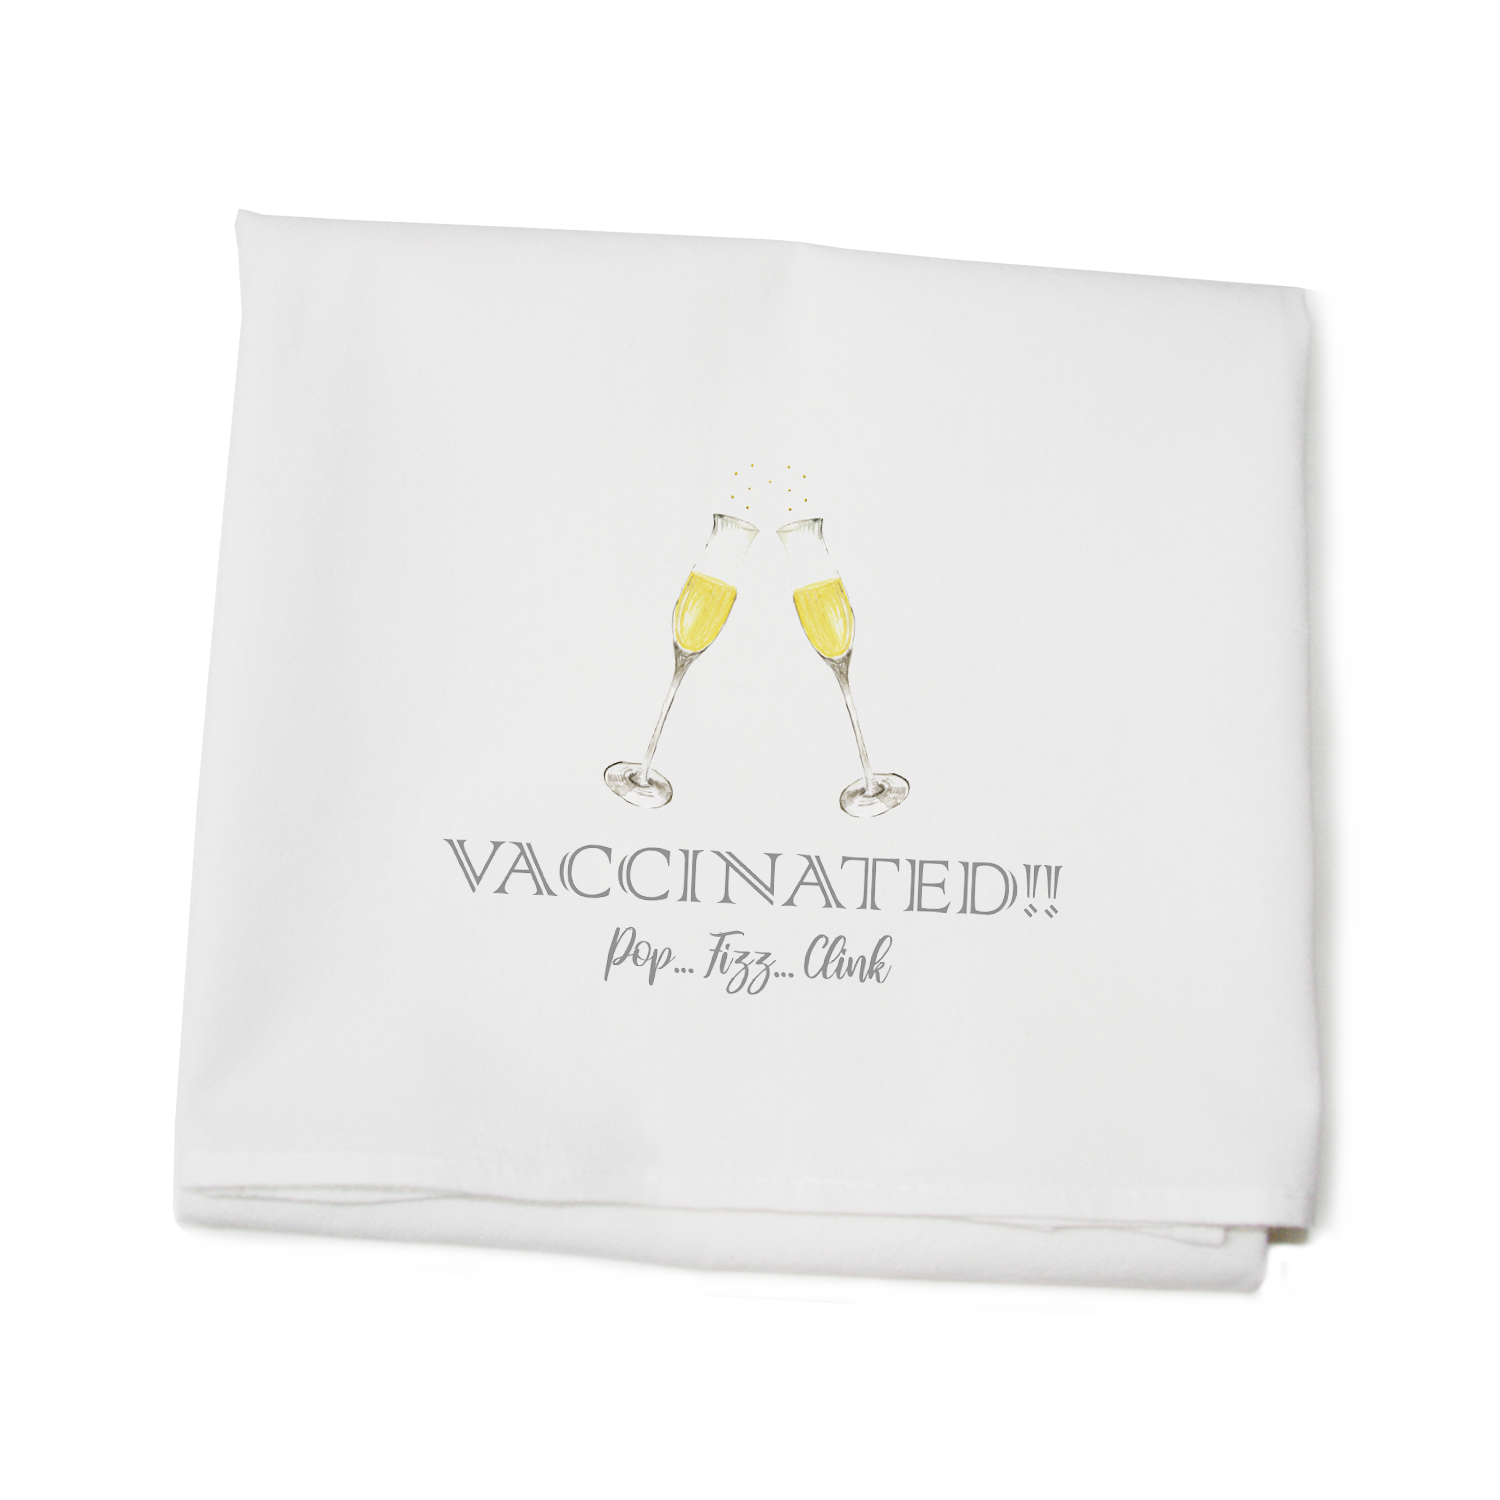 vaccine pop fizz clink flour sack towel